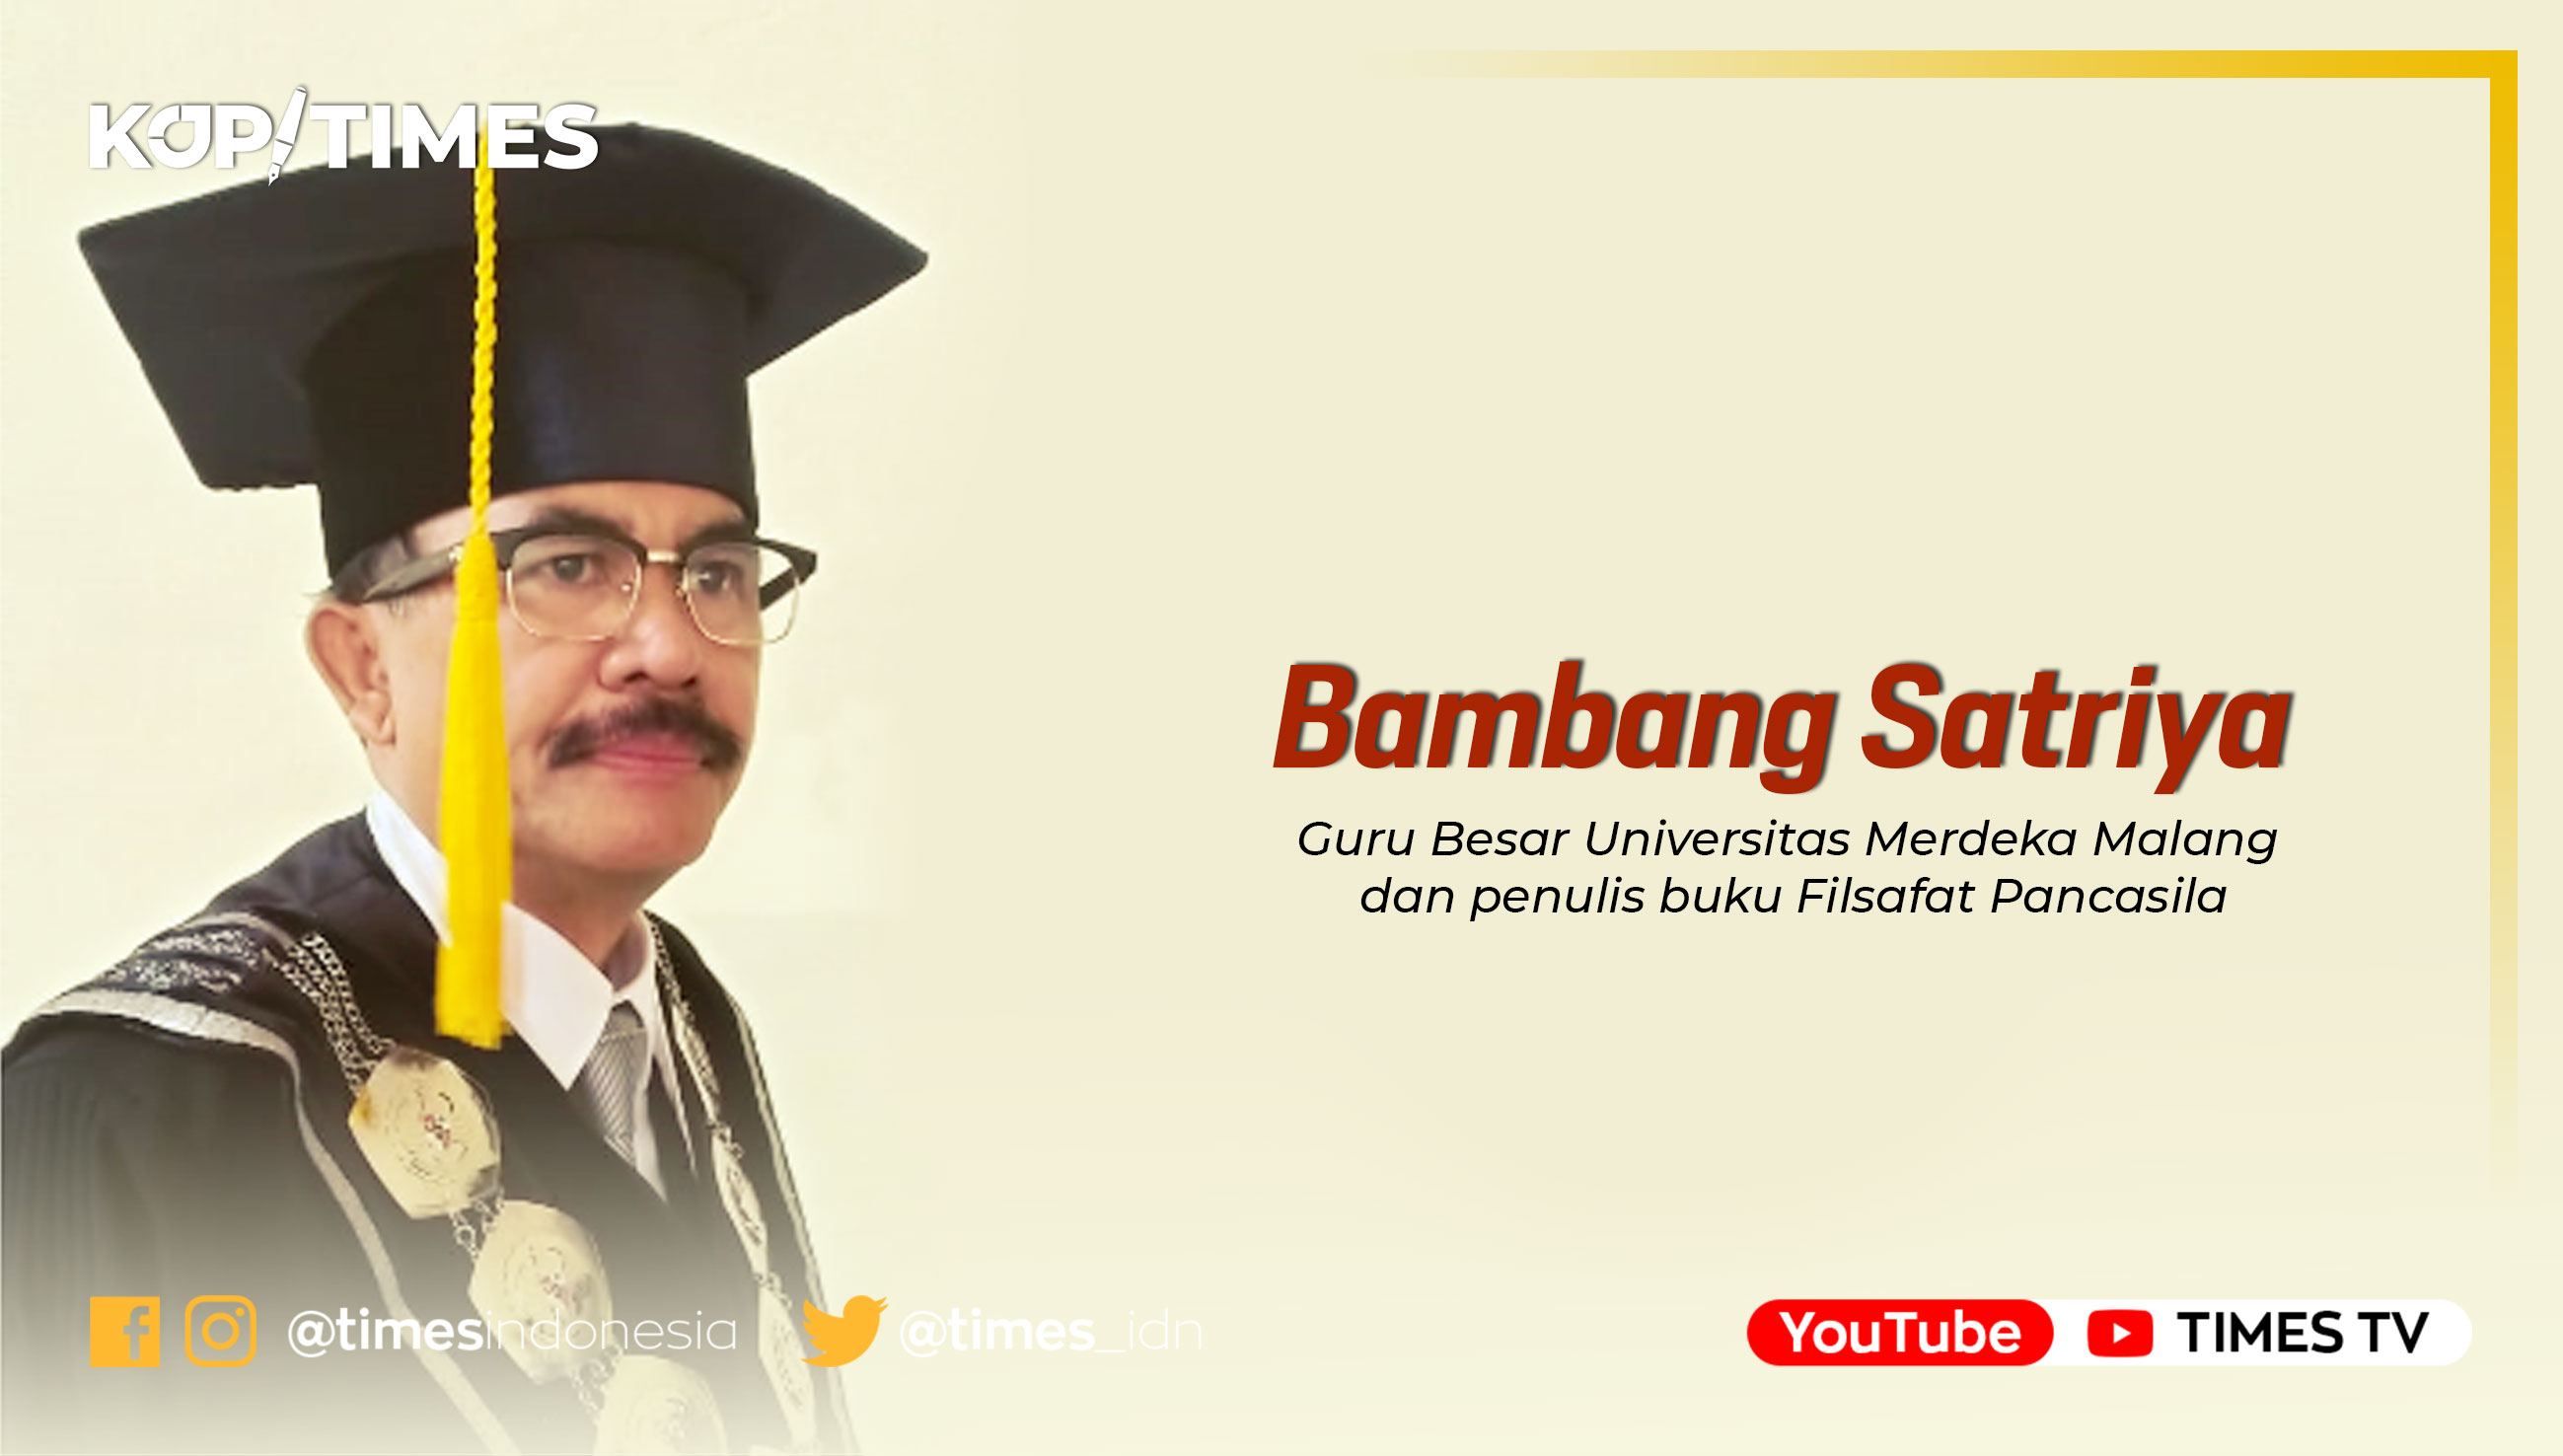 Bambang Satriya, Guru Besar Universitas Merdeka Malang dan penulis buku Pancasila.